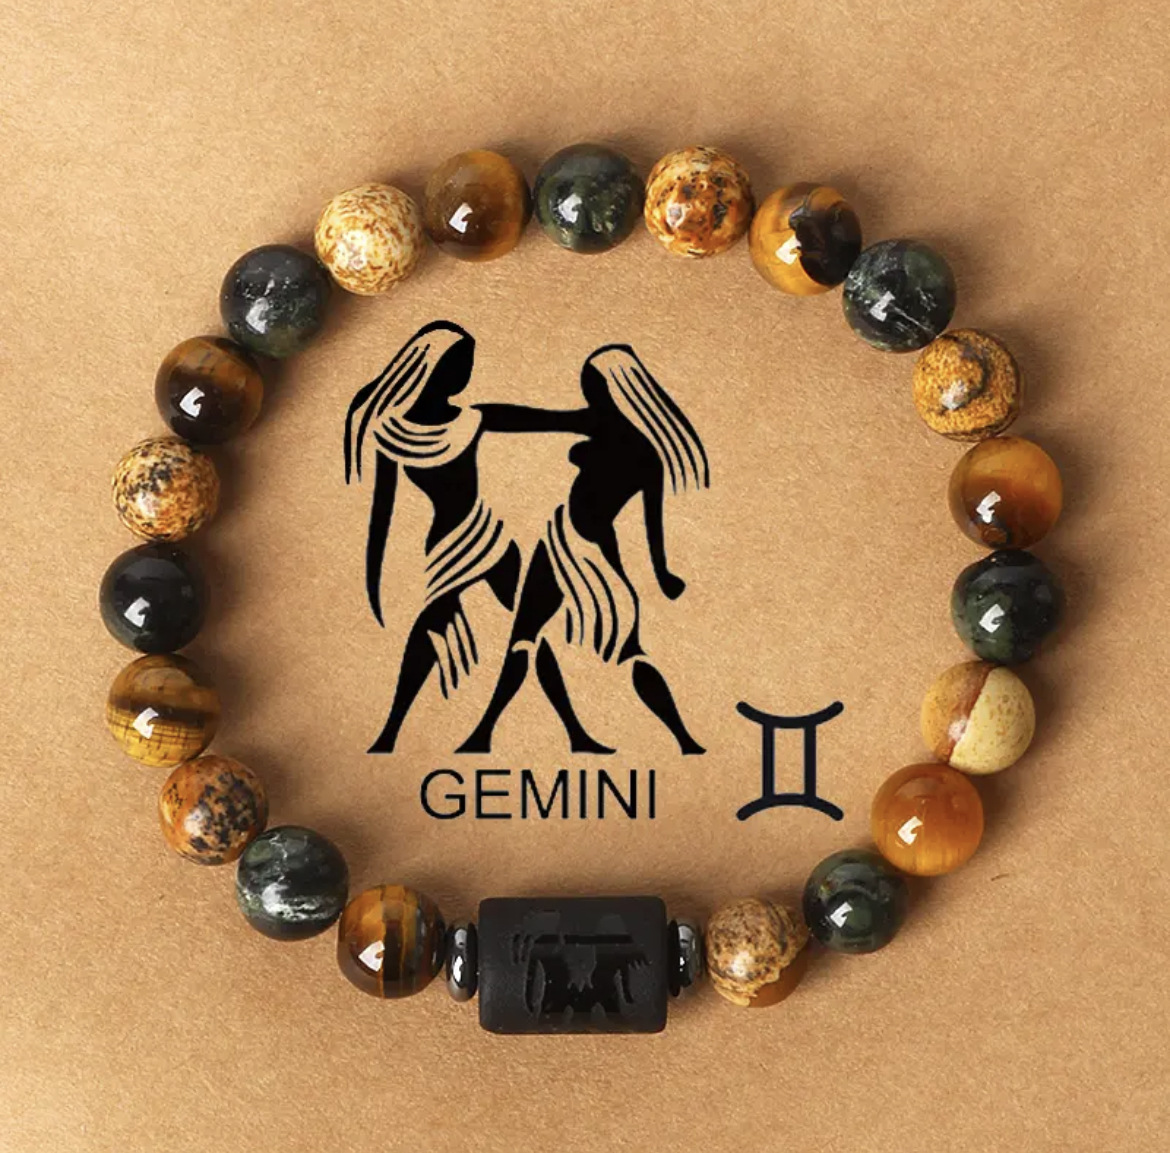 1 Gemini